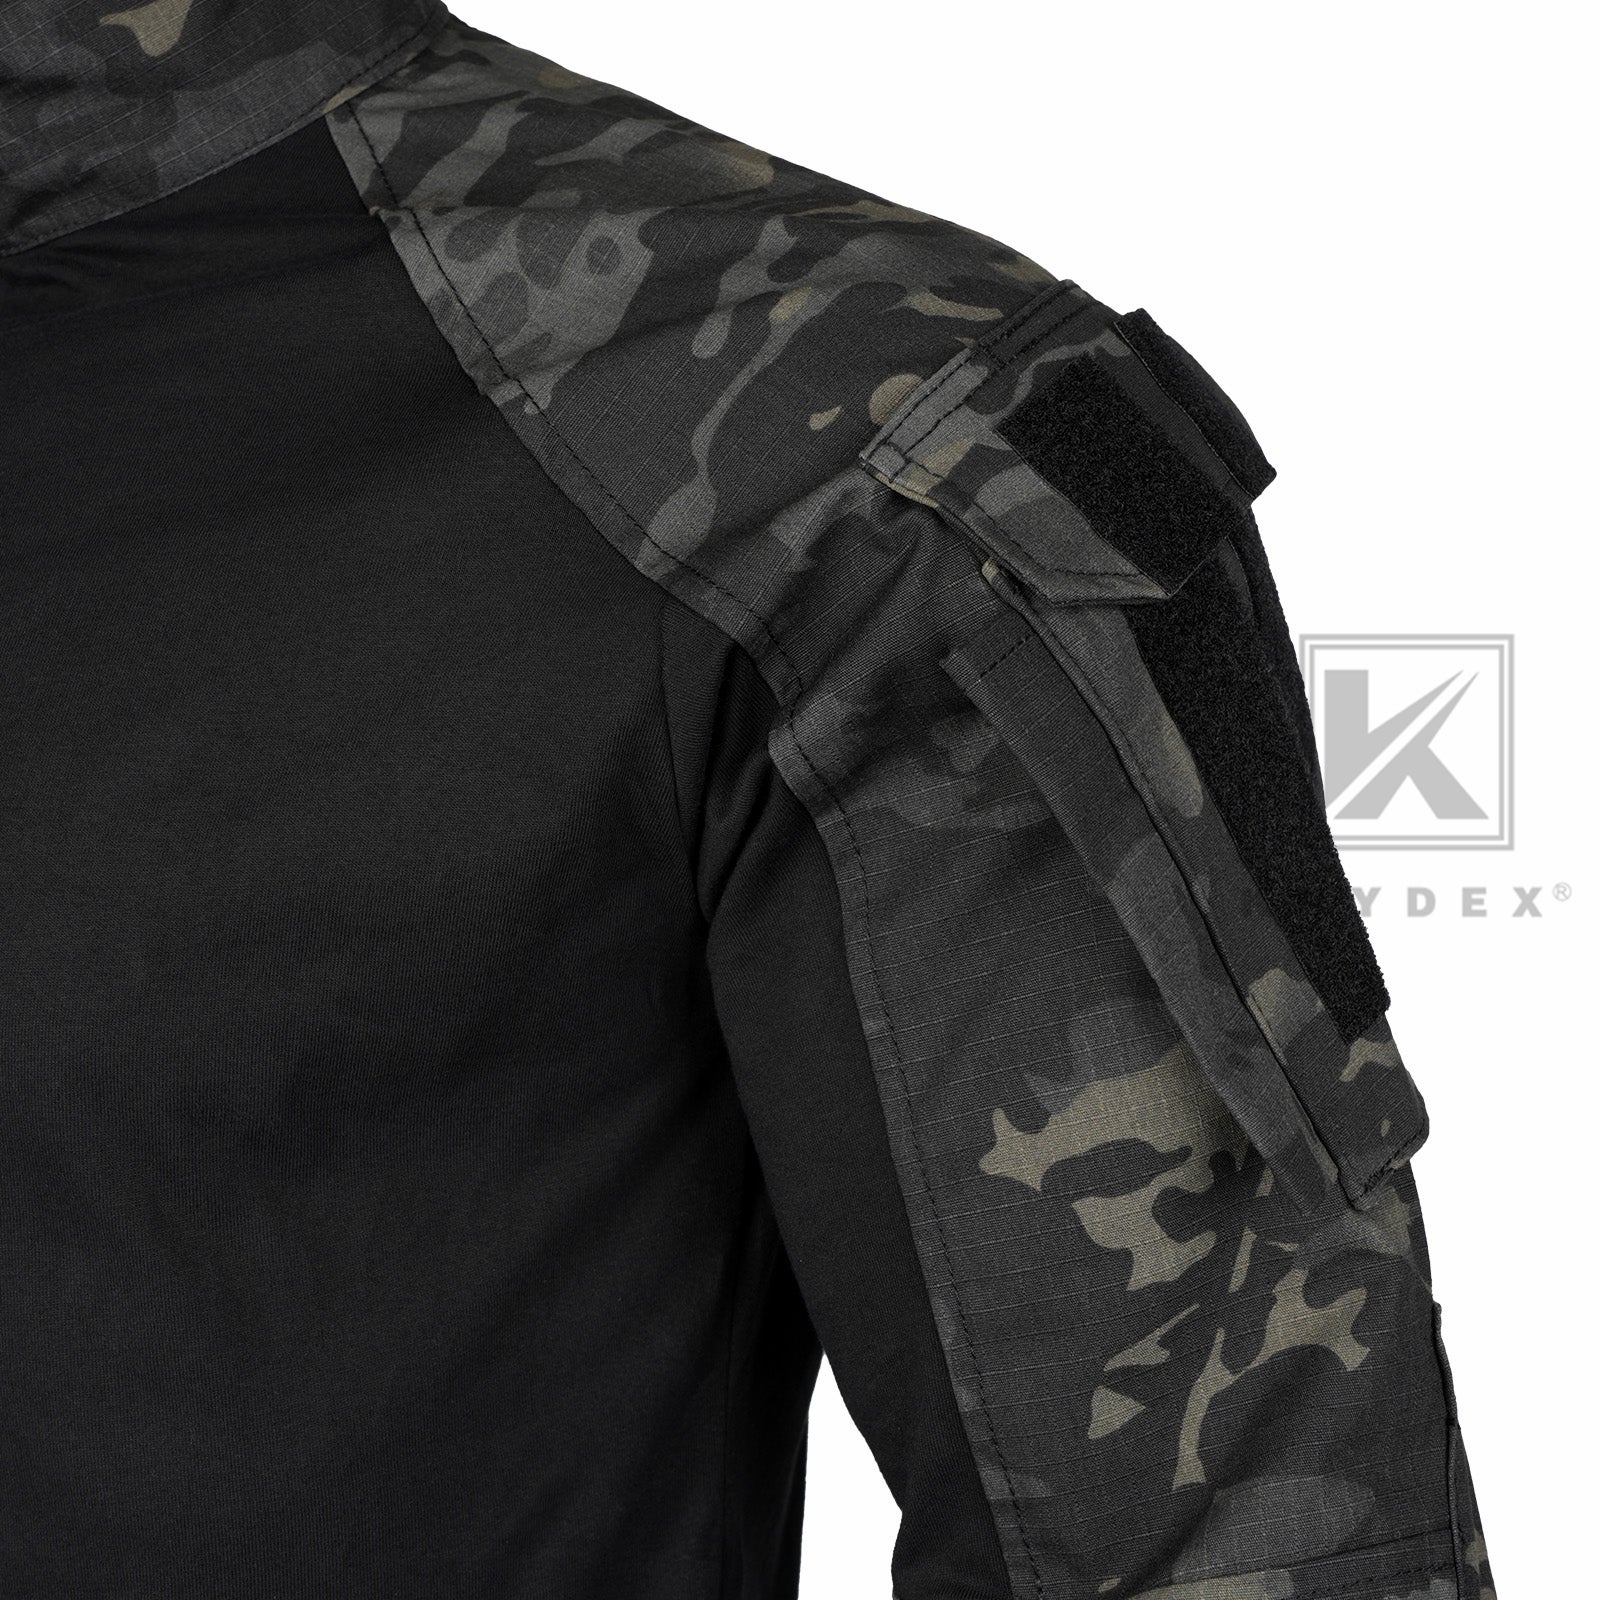 Kryptek 'Tactical 3' Combat Shirt – Raid Pattern – The Full 9